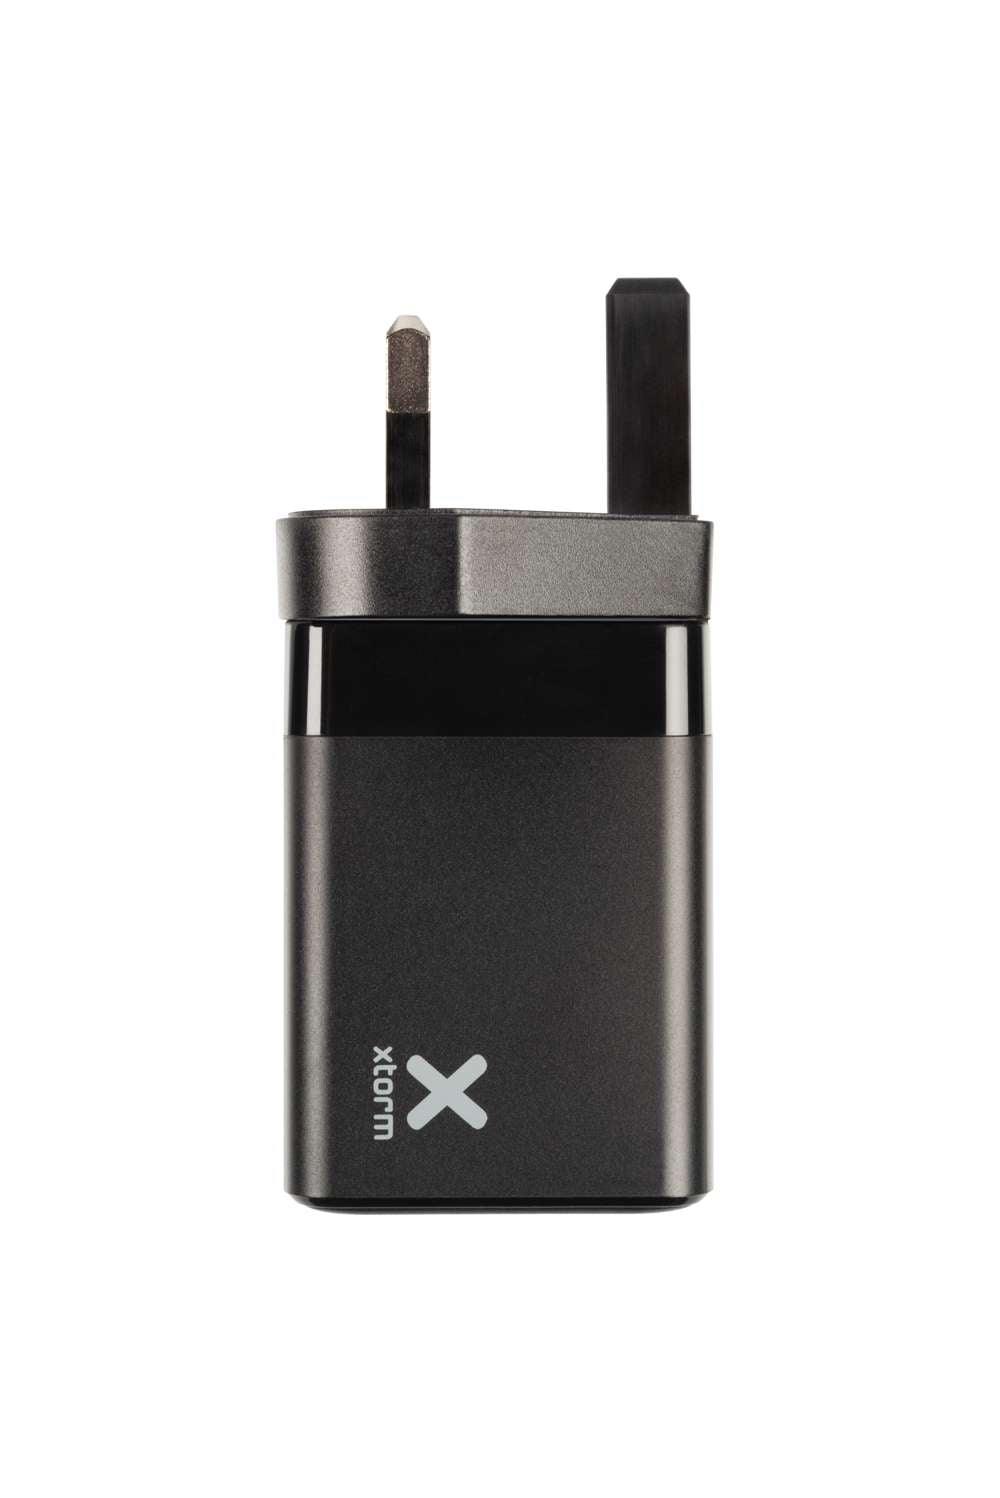 Xtorm Xtorm XA011 Volt Reisstekker - EU/VK/VS naar 2xUSB + Xtorm USB naar USB-C kabel